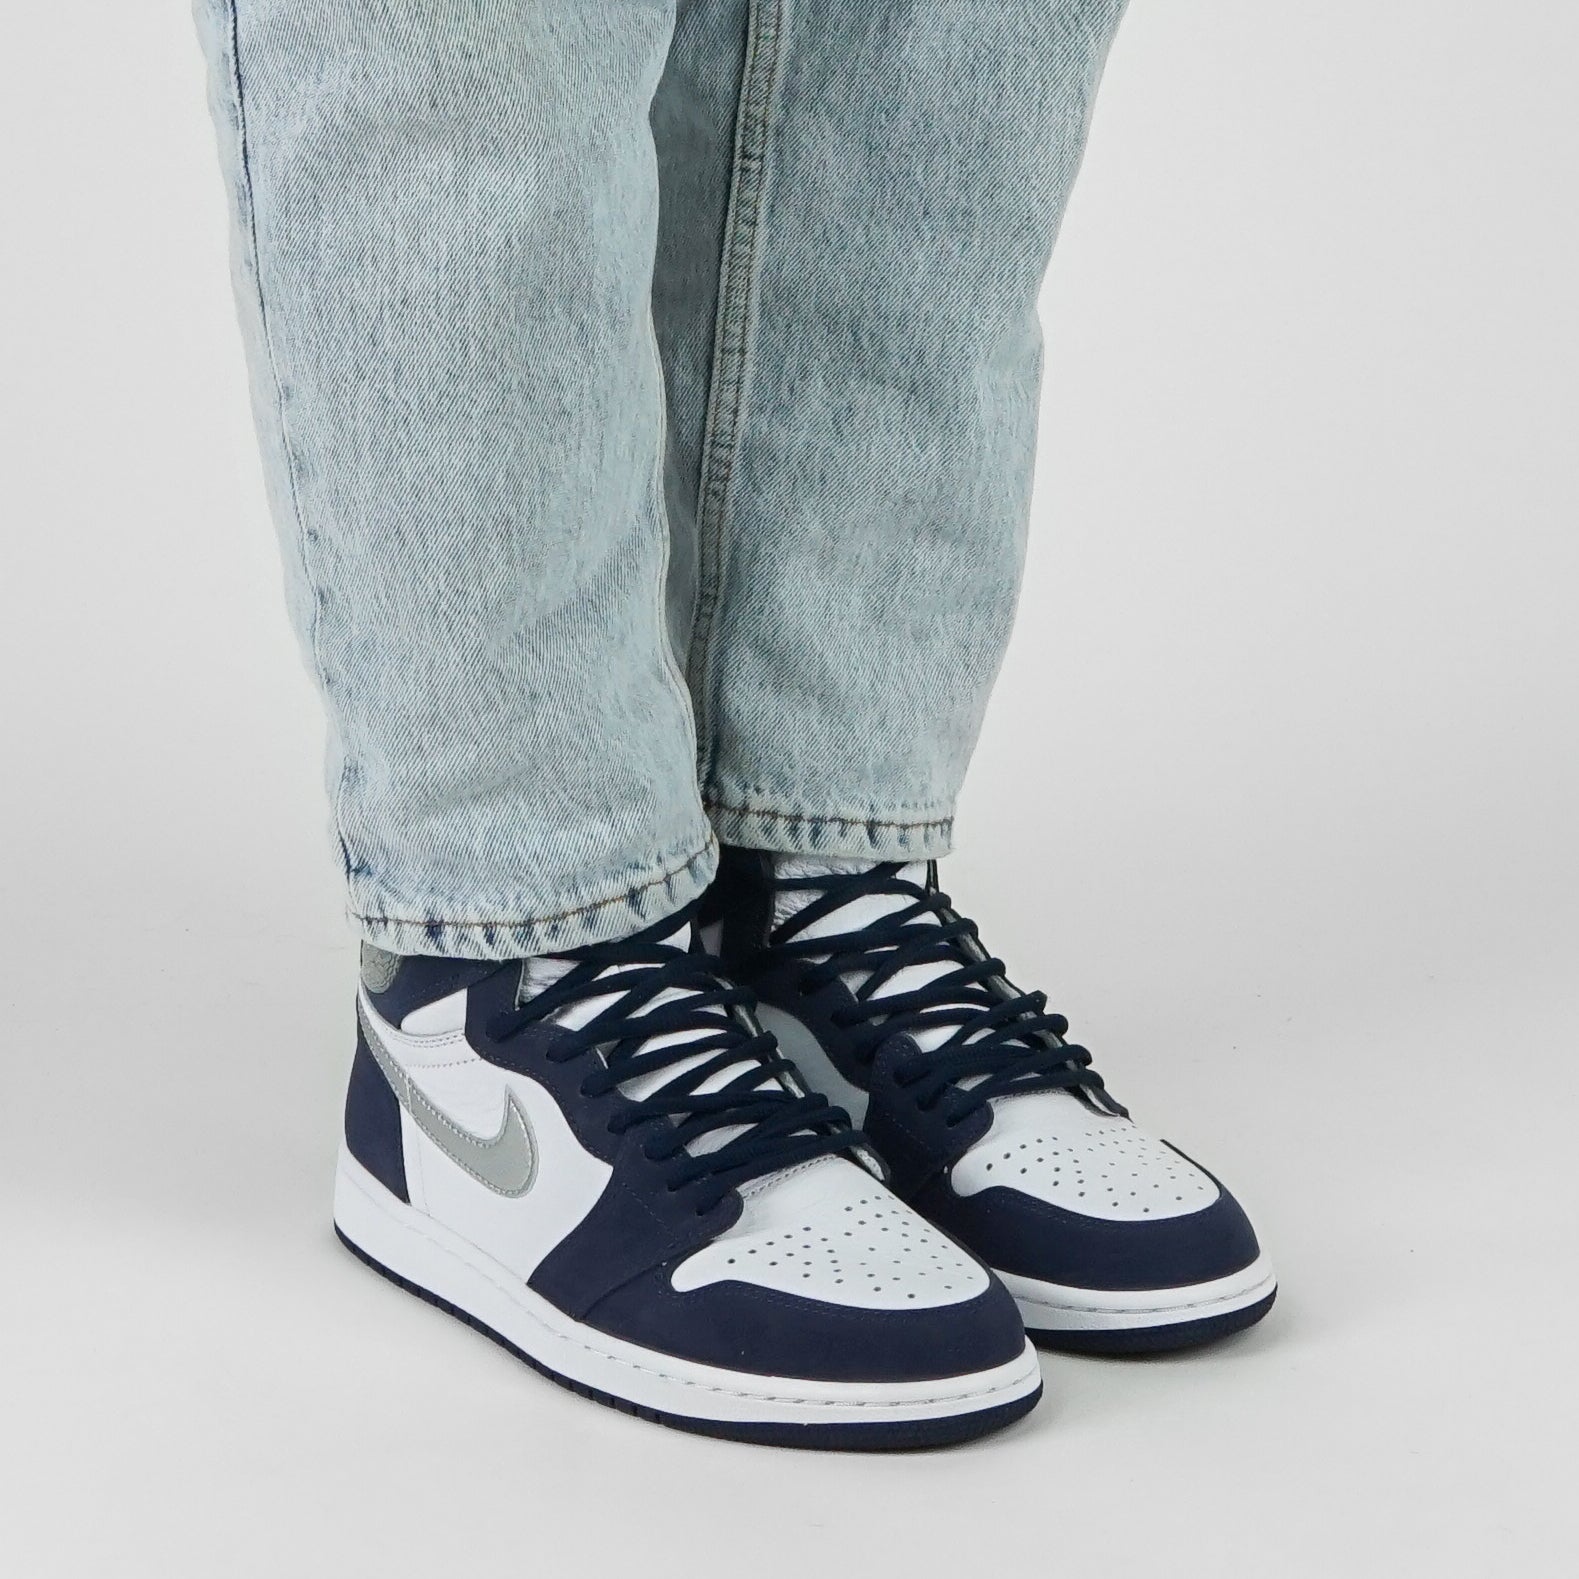 Nike Jordan 1 "Midnight Navy" High - Jordan 1 | Trendiga kläder & skor - Merchsweden |